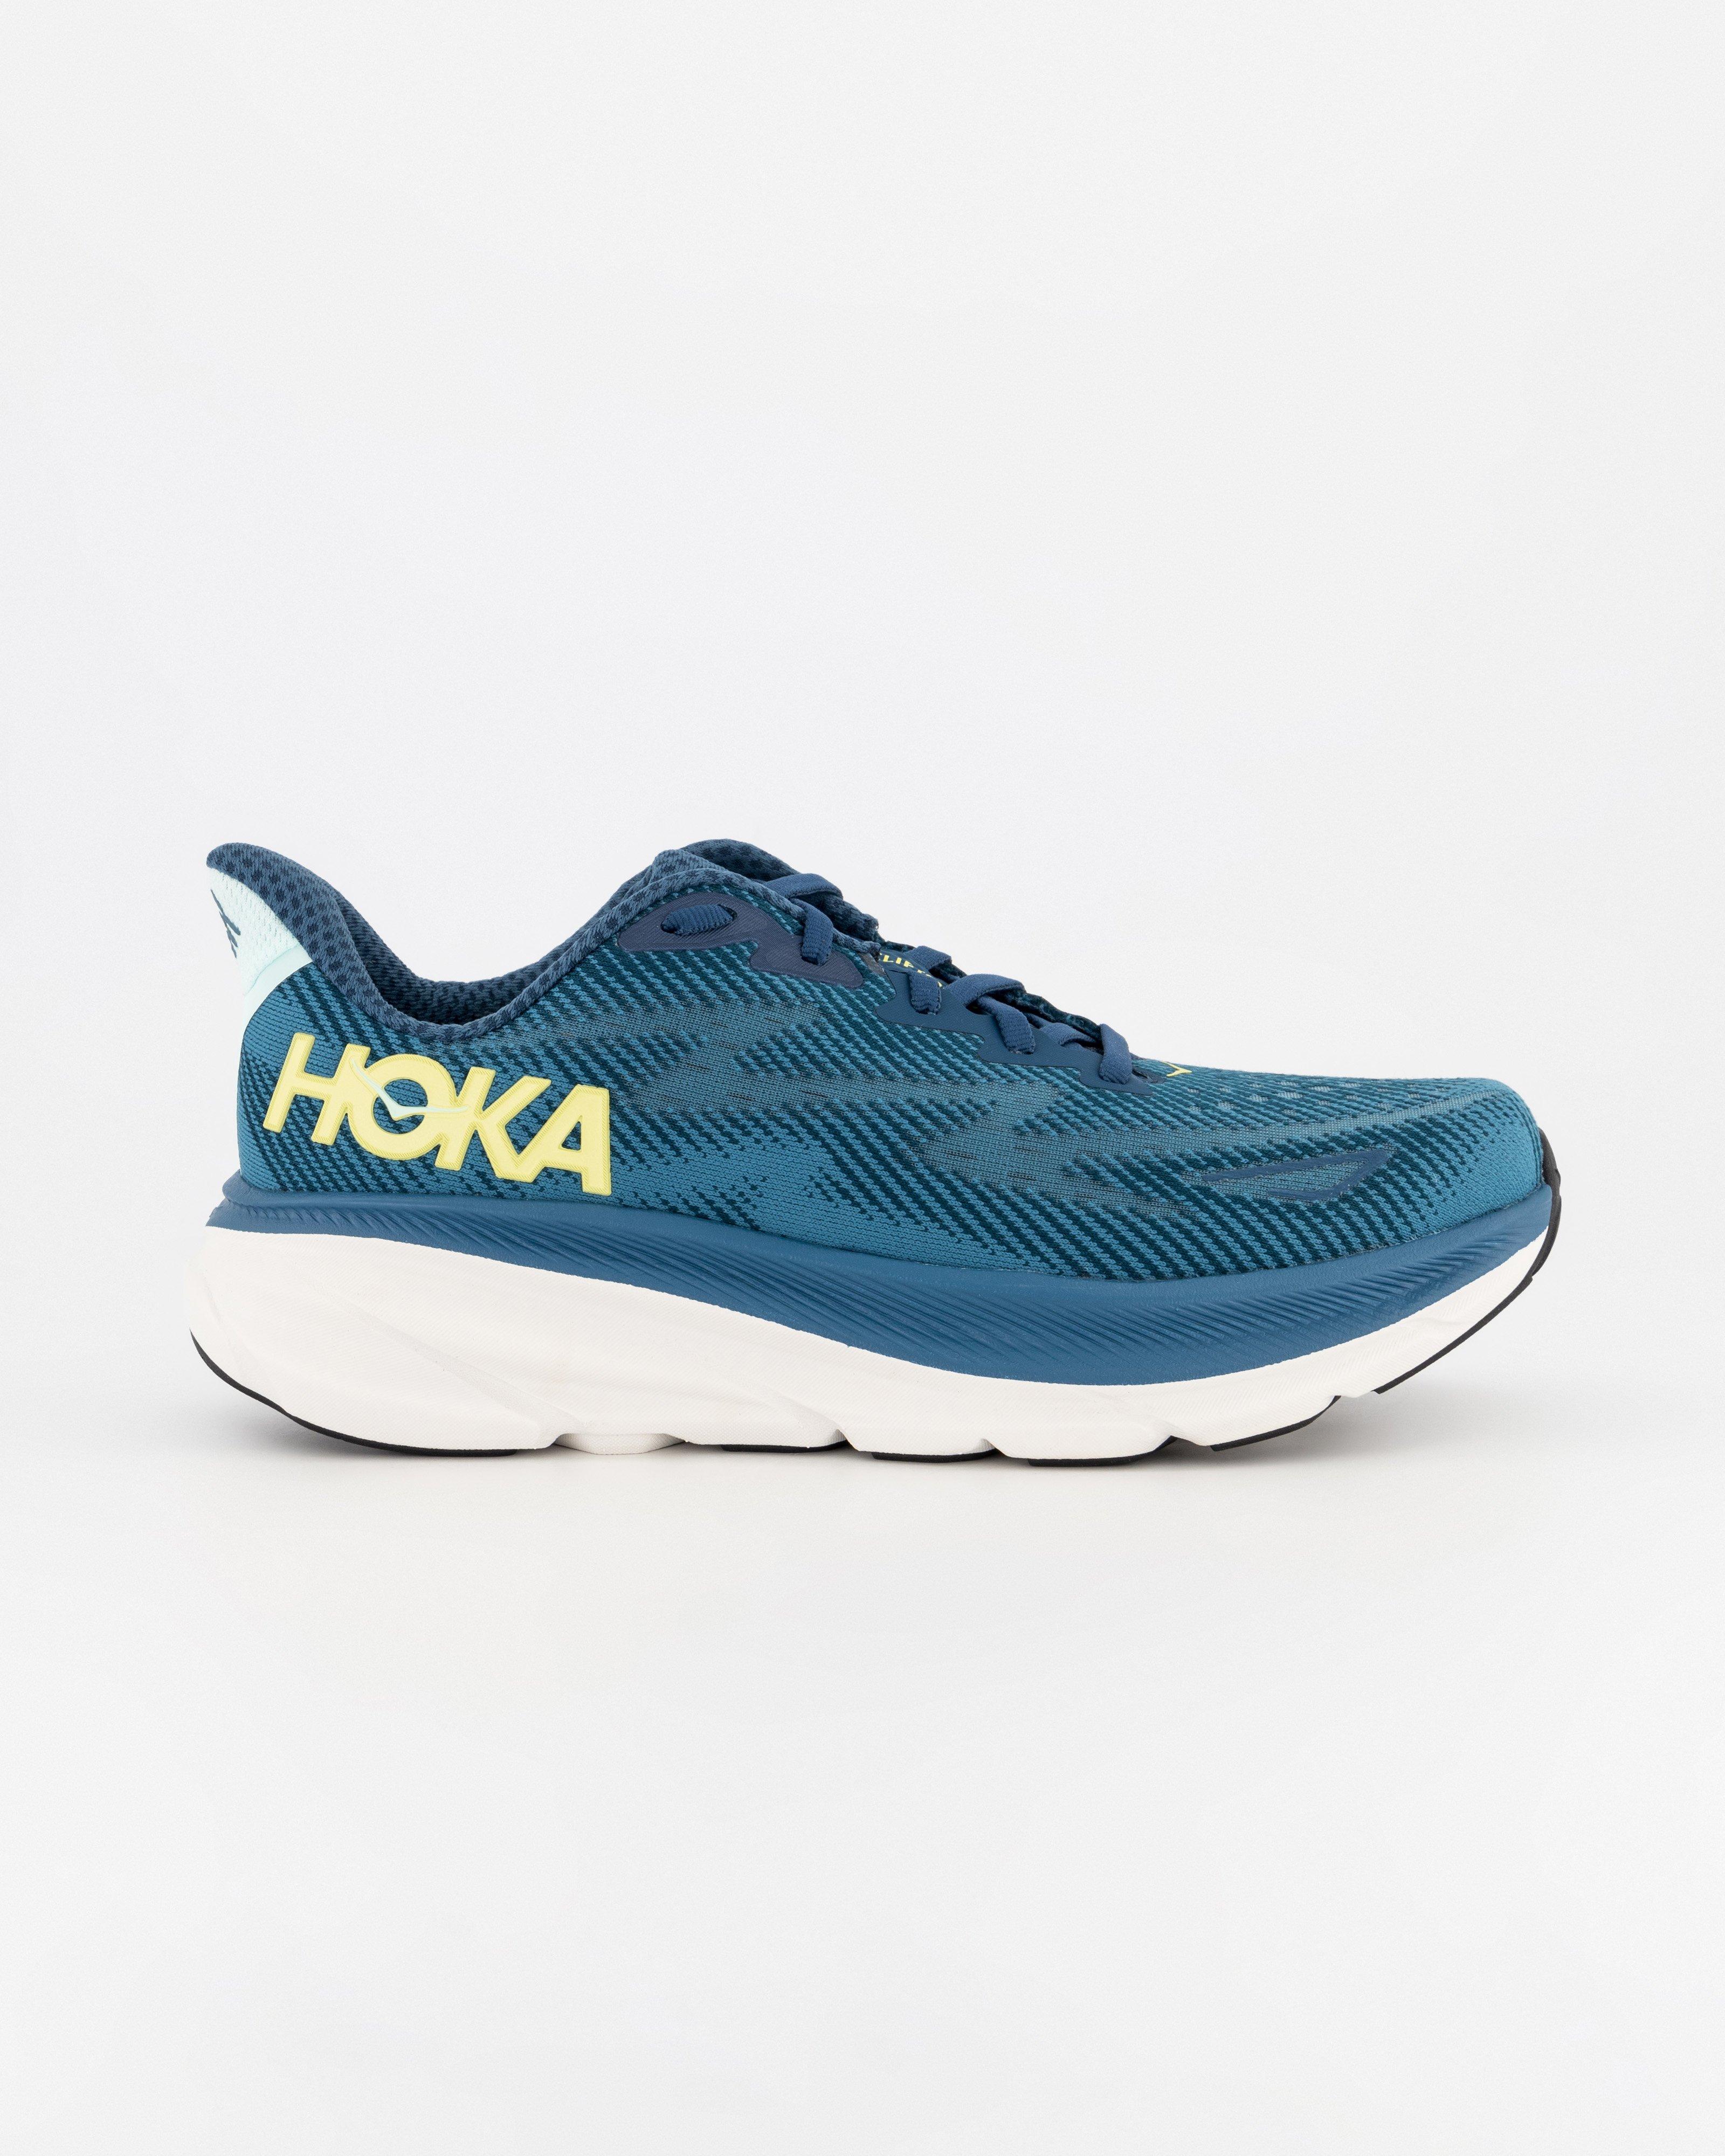 HOKA Clifton 9 Road-Running Shoes - Men's